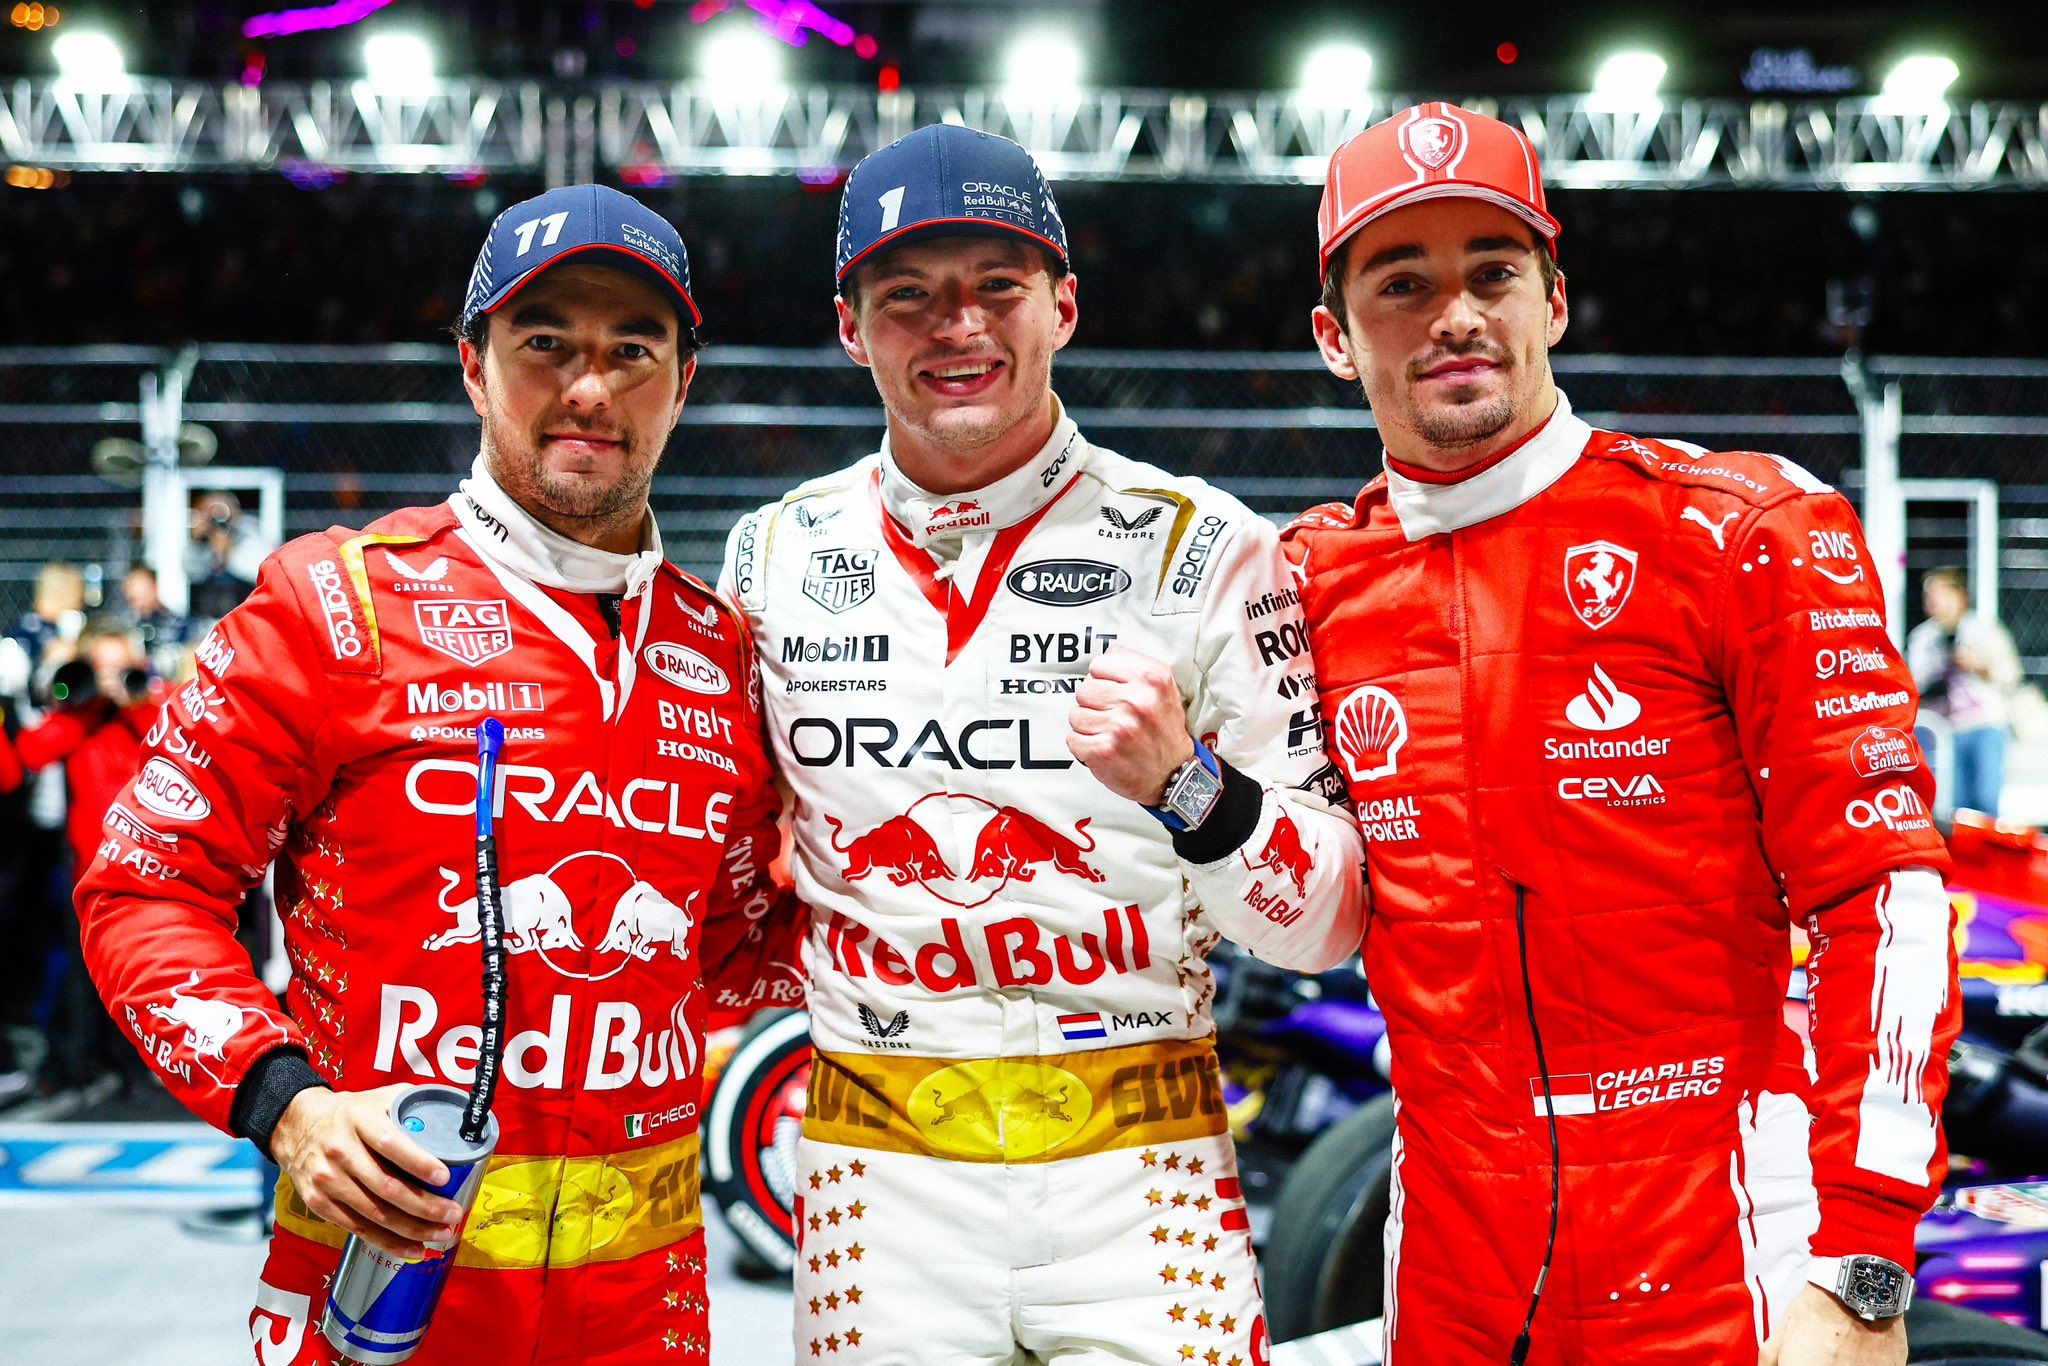 Post GP Las Vegas: Con mucha batalla, Max Verstappen sale victorioso